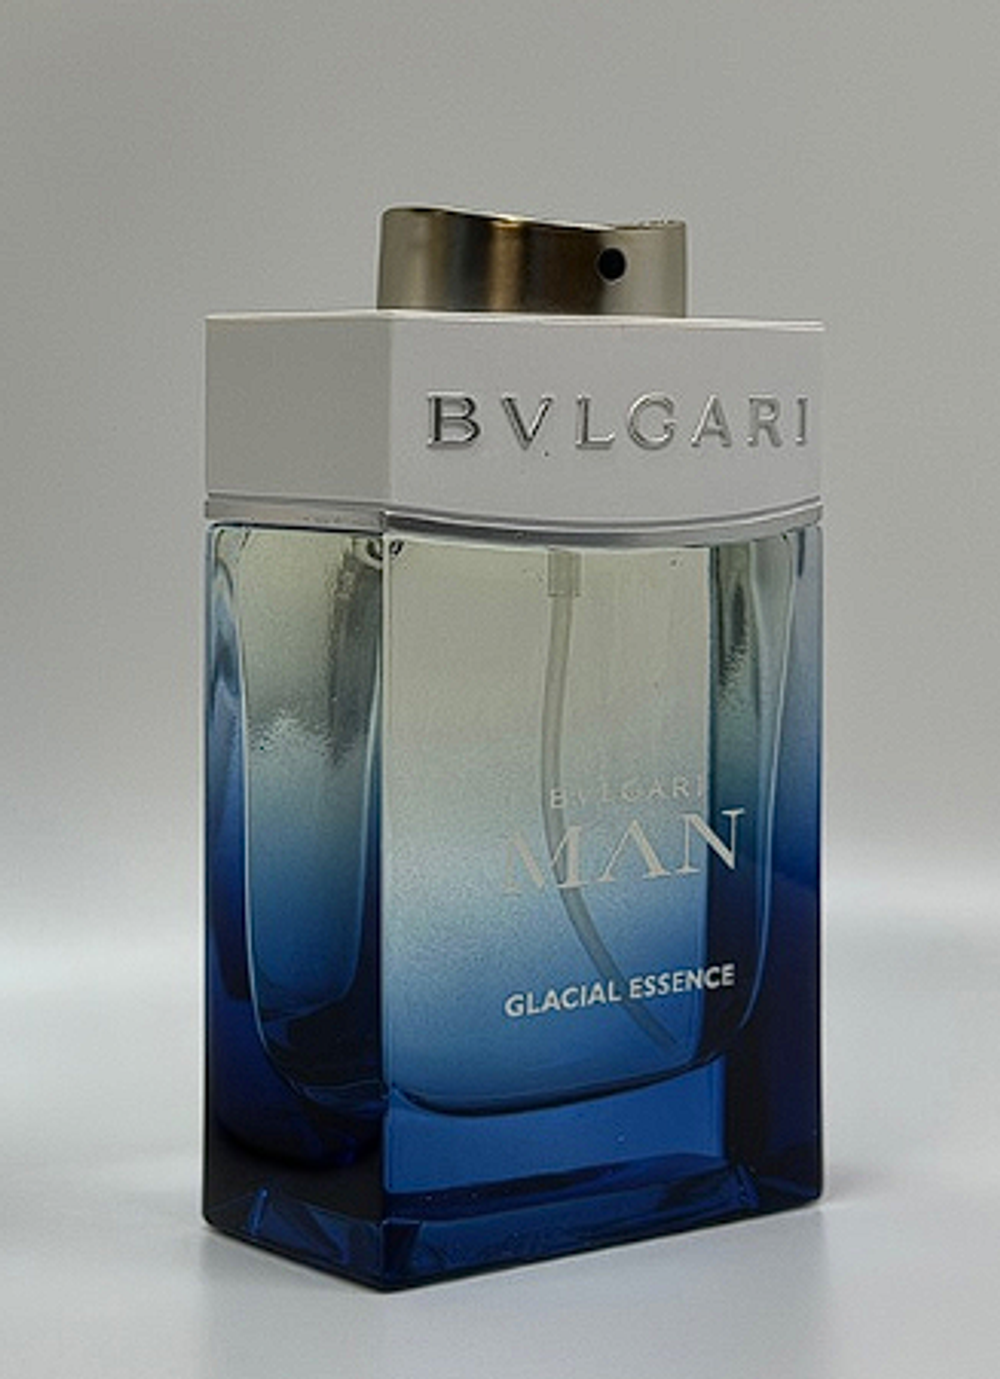 Bvlgari Bvlgari Man Glacial Essence (duty free парфюмерия)